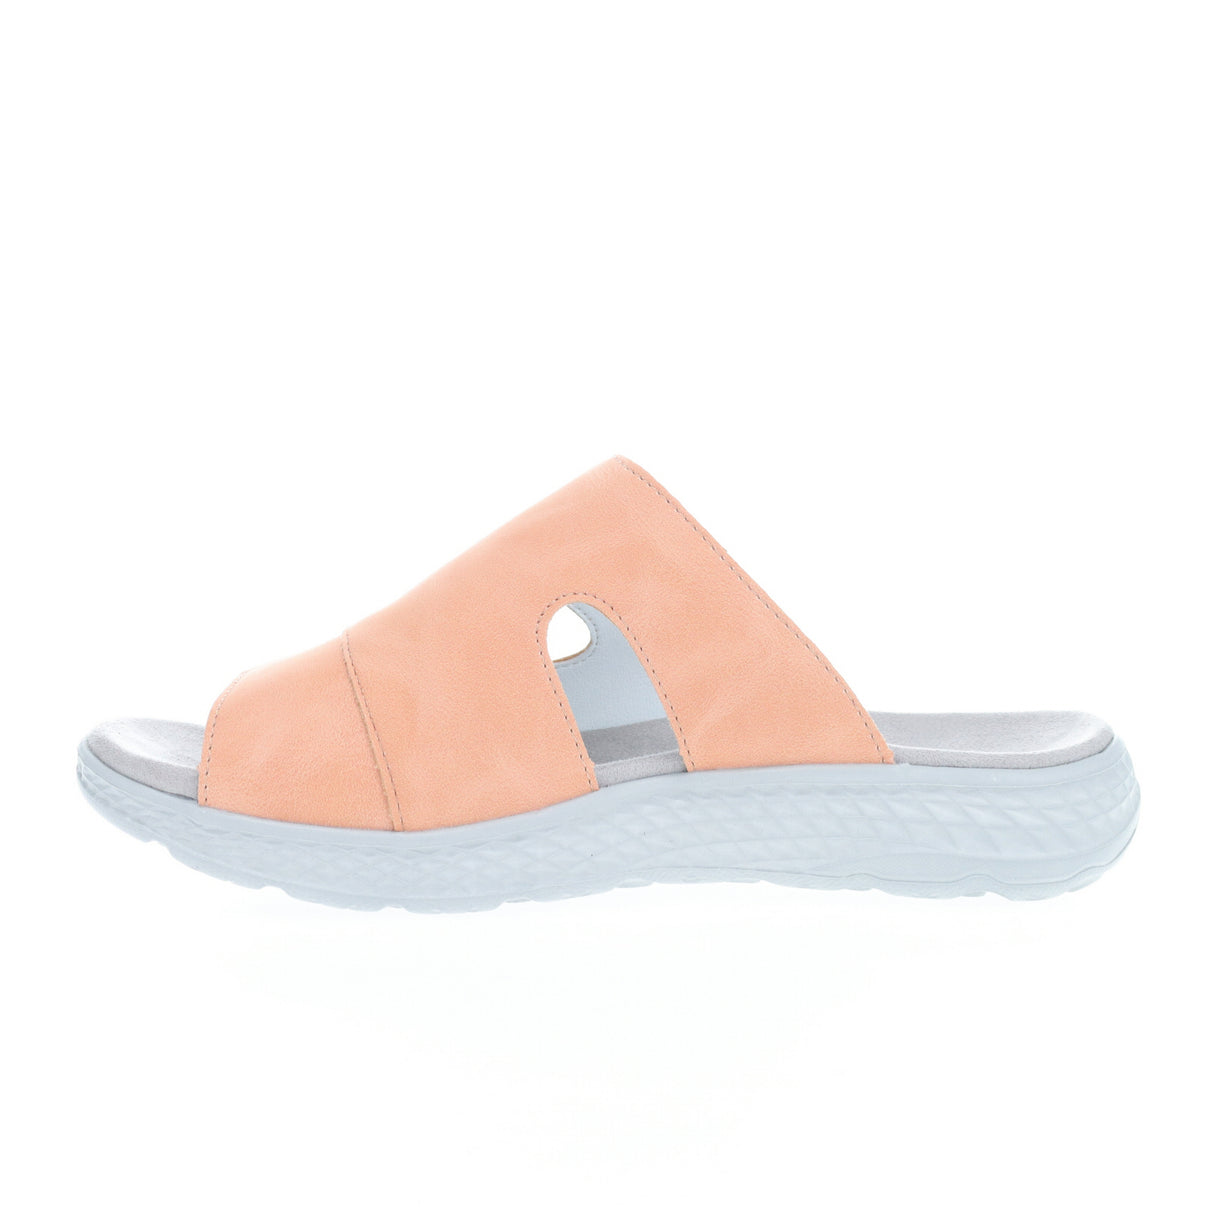 Propet TravelActiv Sedona Slide Sandal (Women) - Apricot Sandals - Slide - The Heel Shoe Fitters